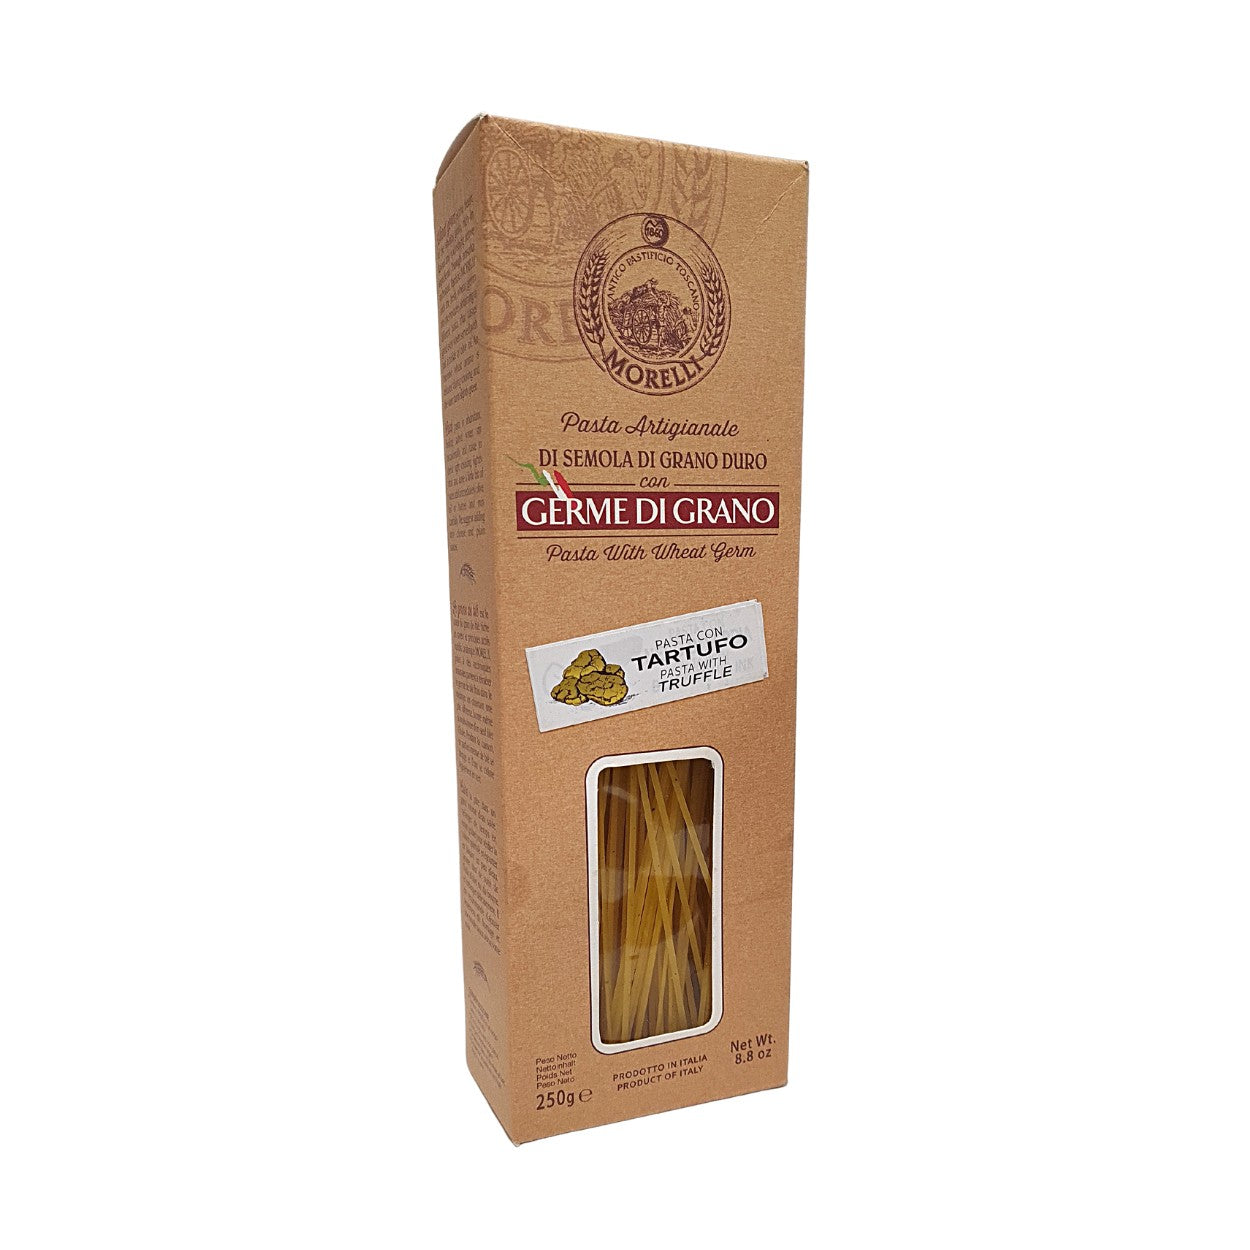 Orecchiette. 500 g De Cecco - Pasta - Mantequerías Bravo